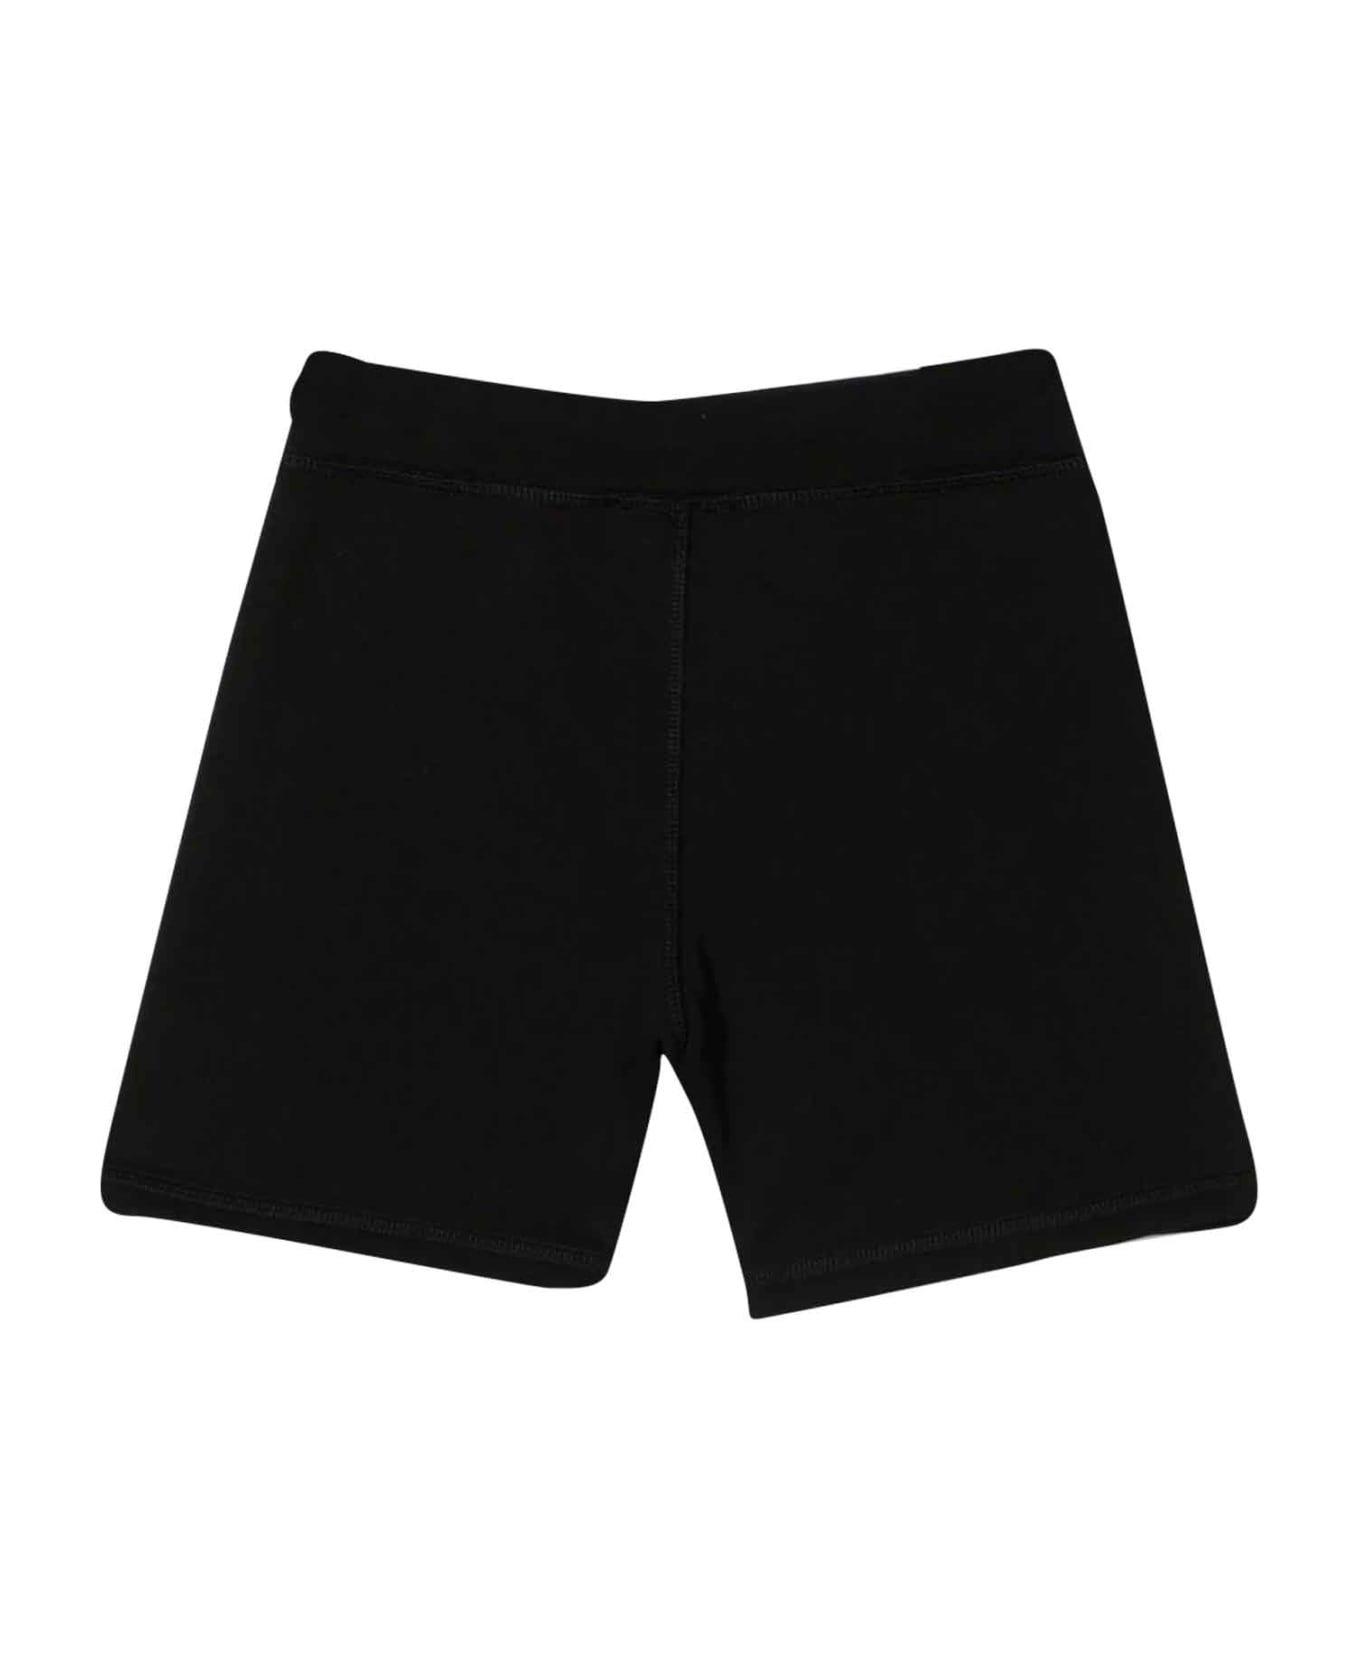 Dsquared2 Unisex Black Sports Shorts - BLACK